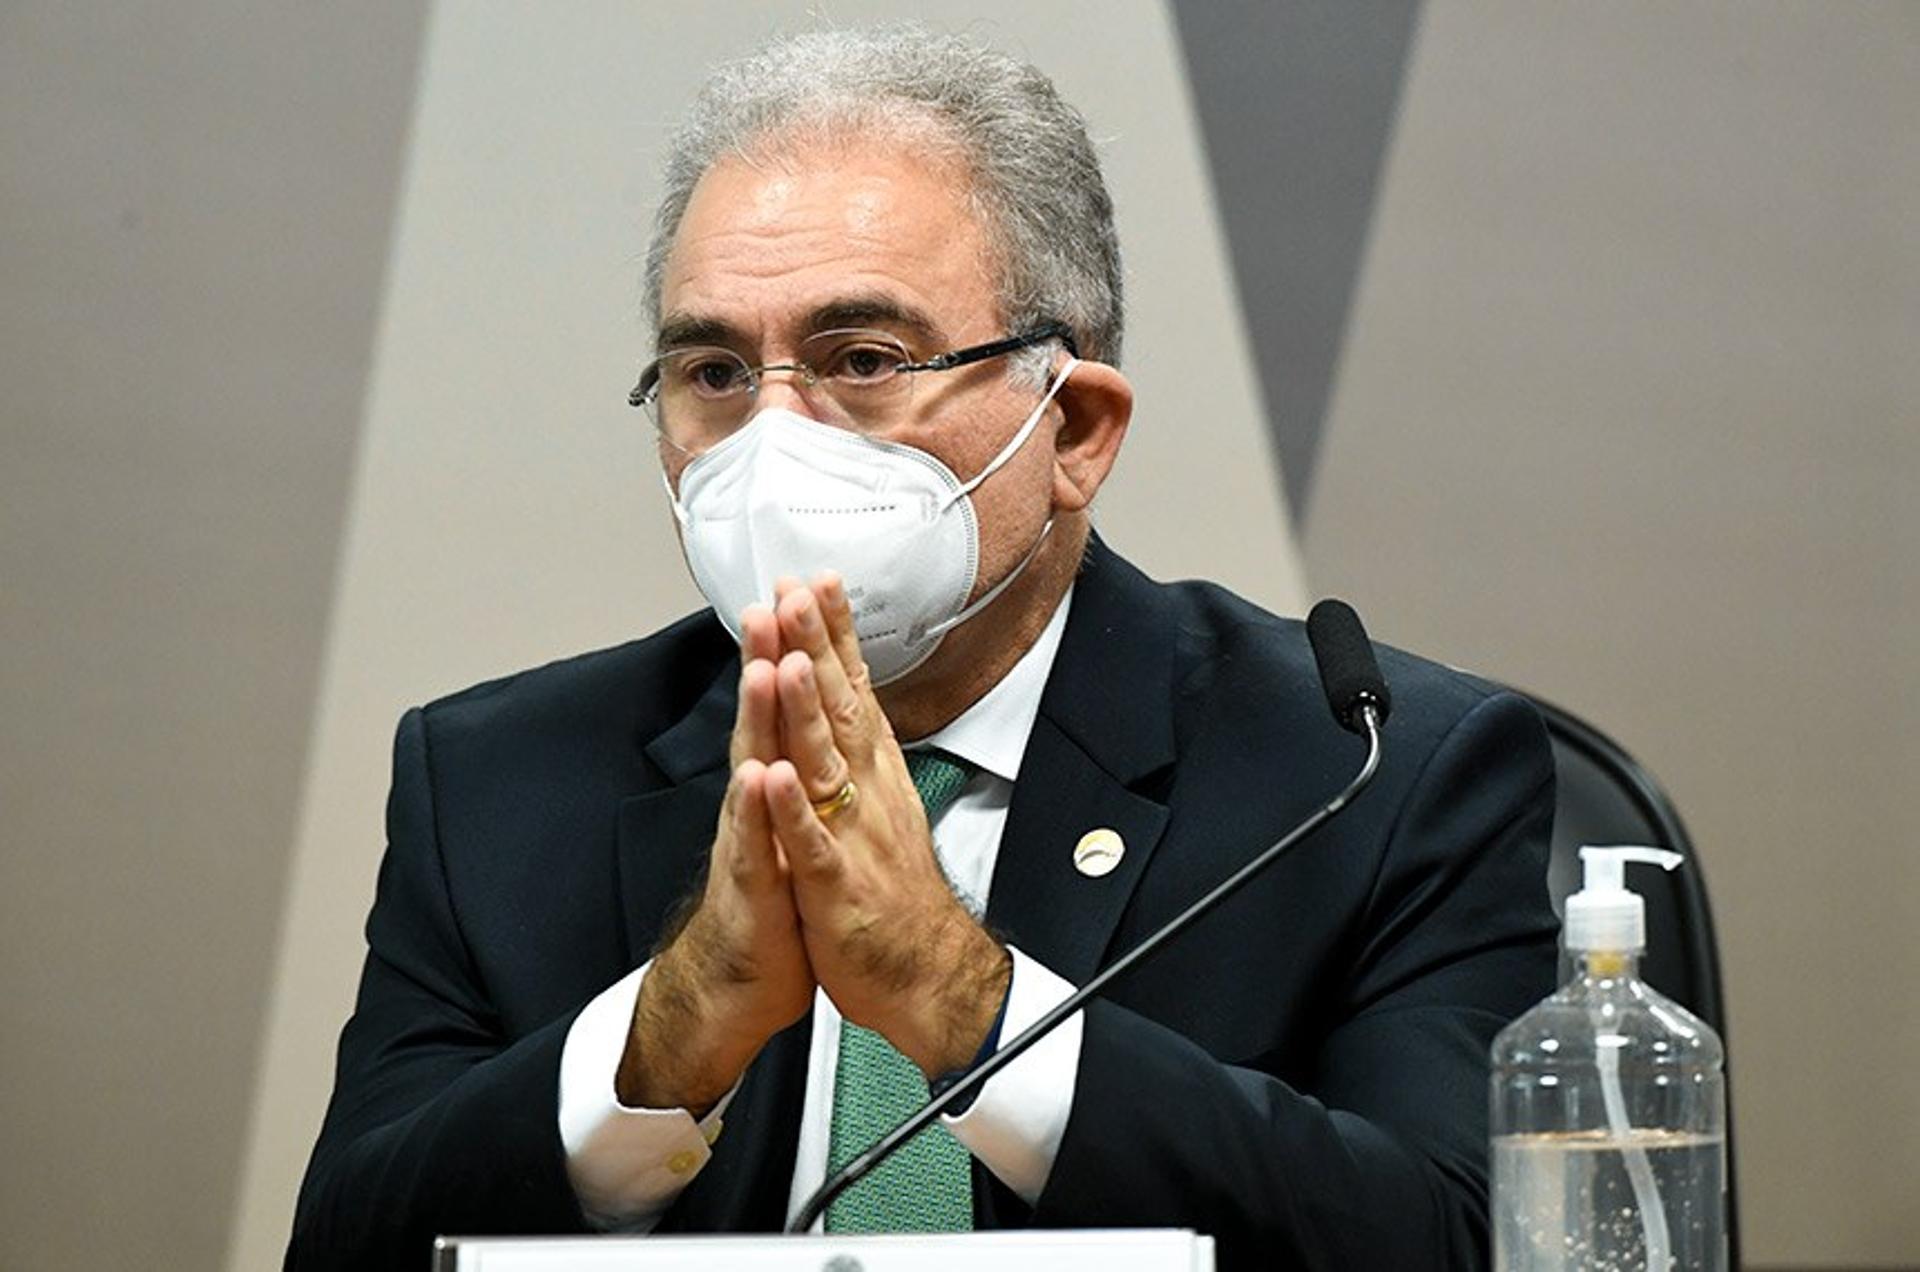 Ministro da Saúde Marcelo Queiroga na CPI